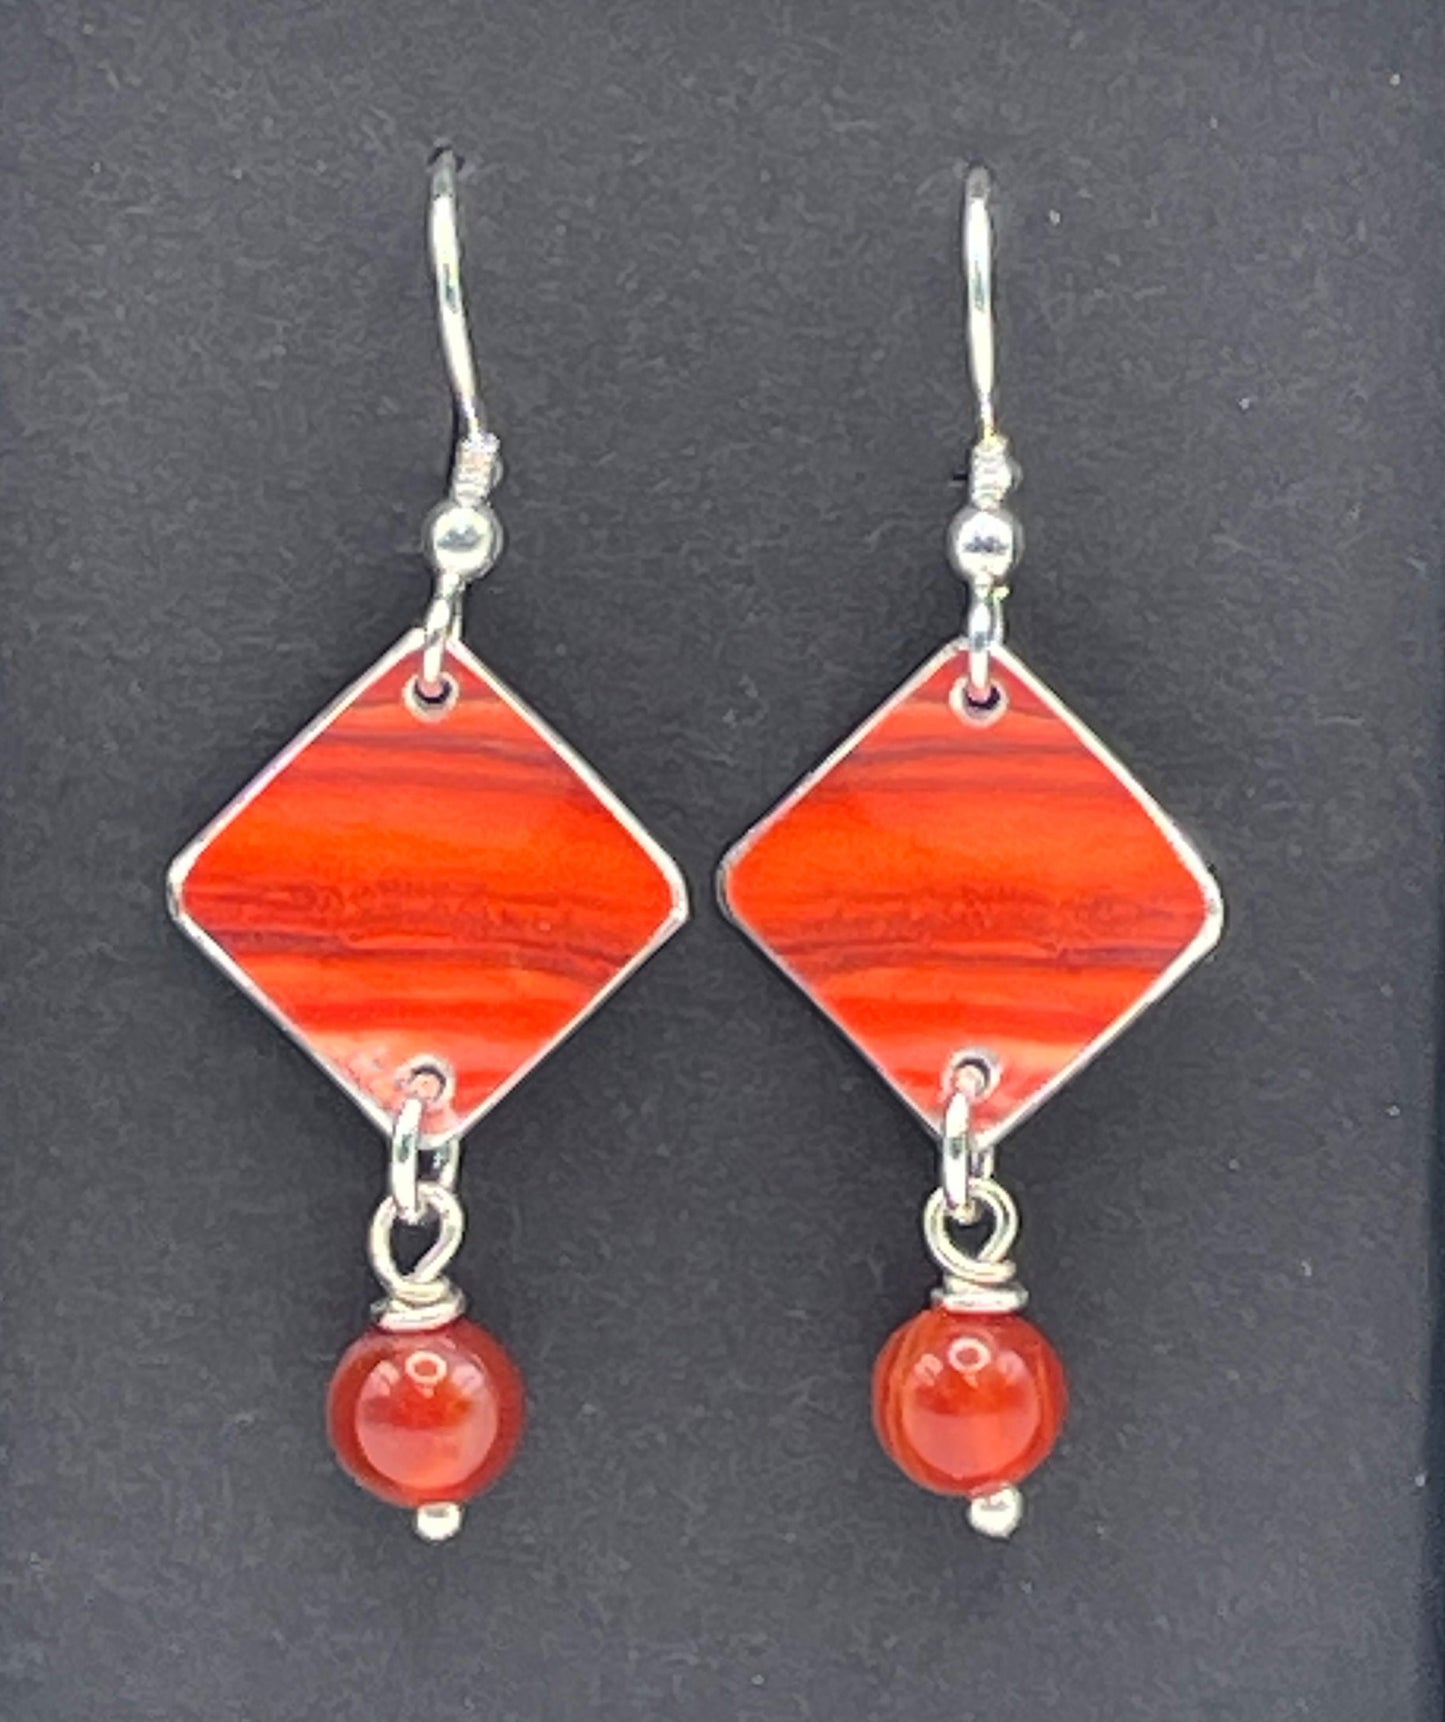 Beach Earrings - Seaside Jewellery - Coastal - Beach earrings - Abstract Earrings - Drop Earrings - Funky Earrings - Vibrant Earrings